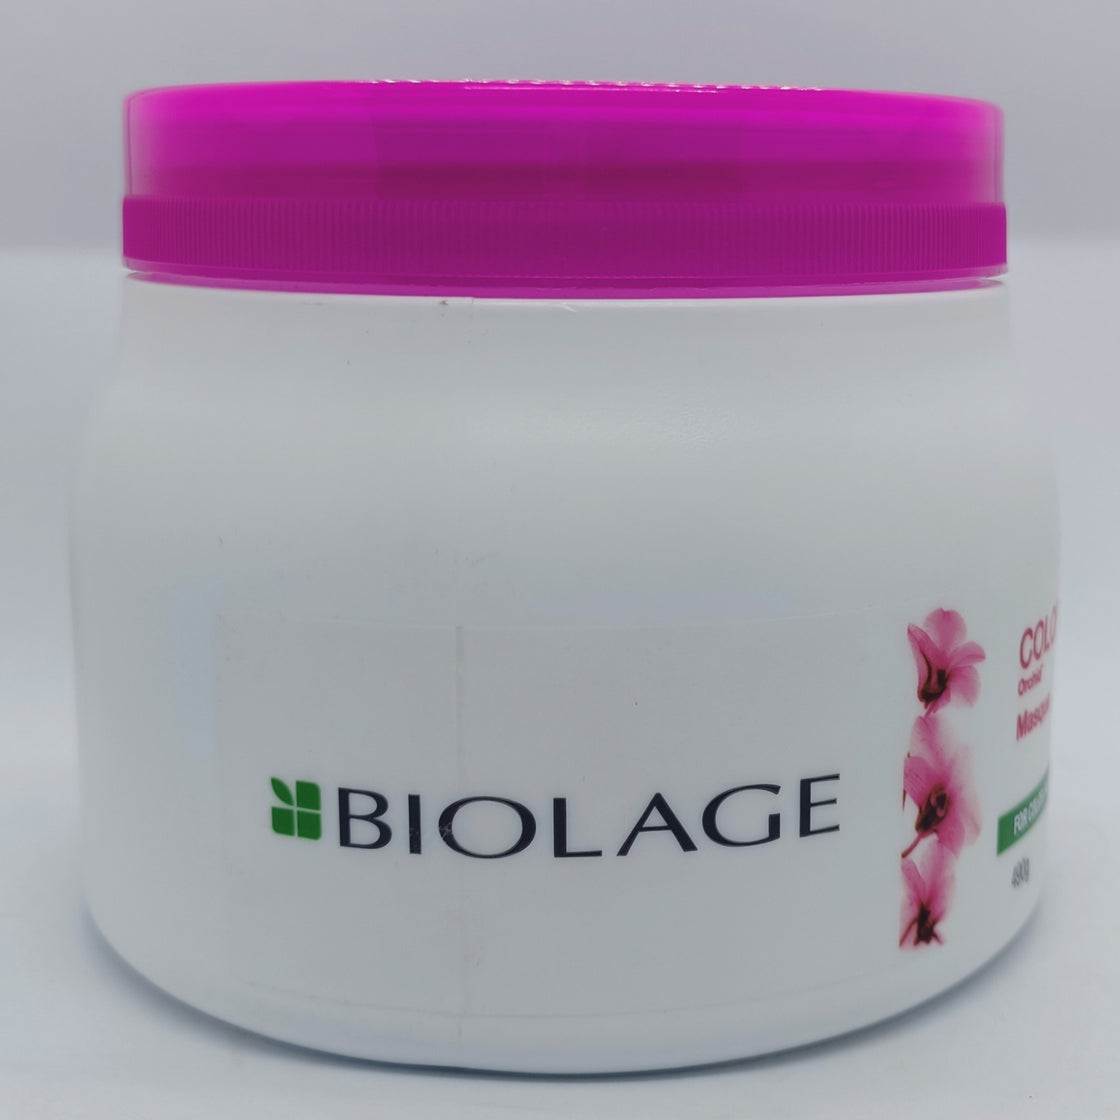 Matrix Biolage ColorLast Masque for Color Protection  490gm